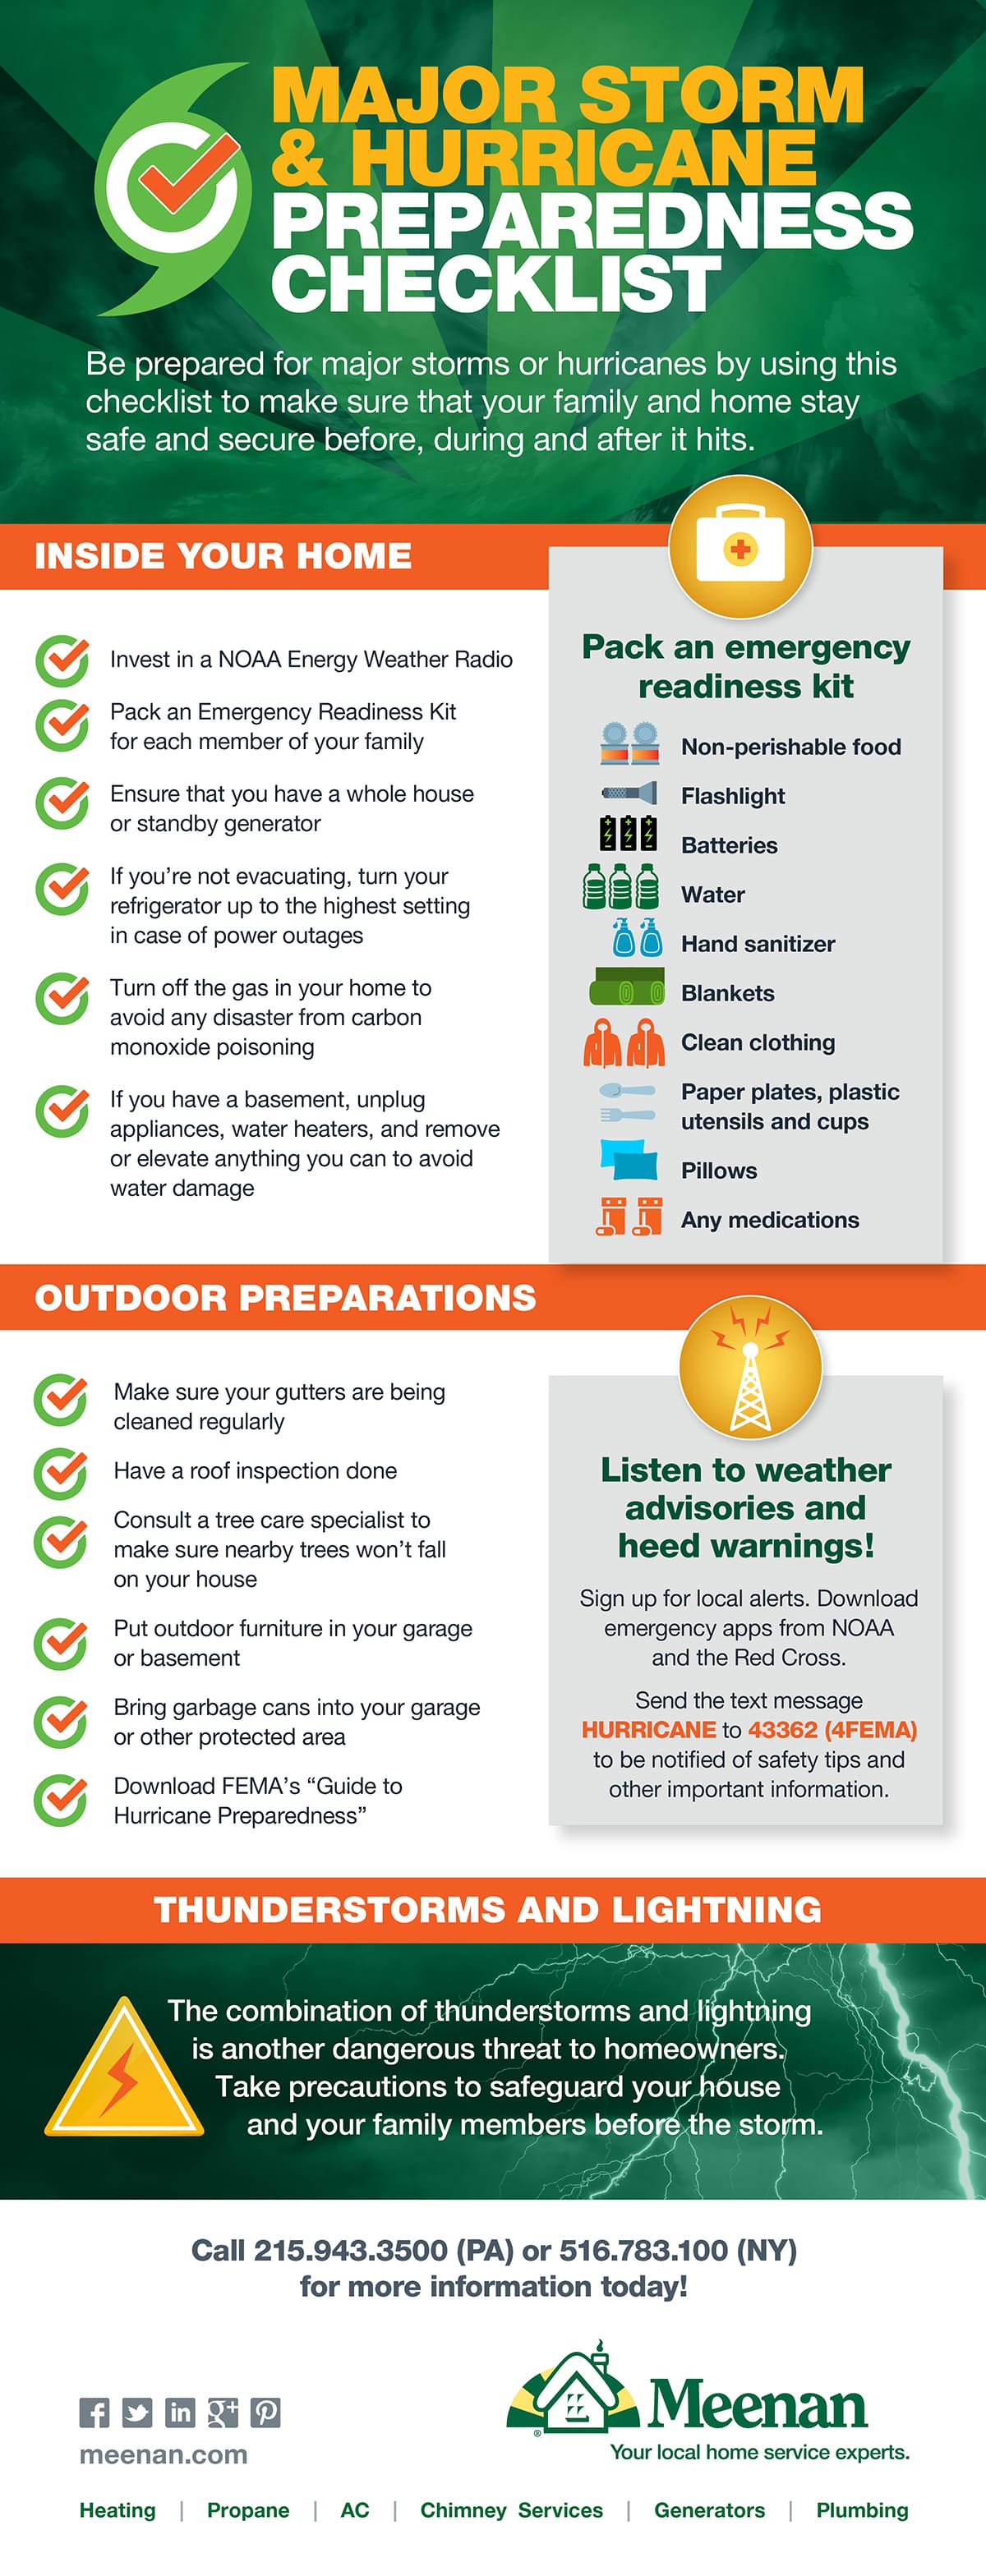 Hurricane and storm preparedness checklist infographic